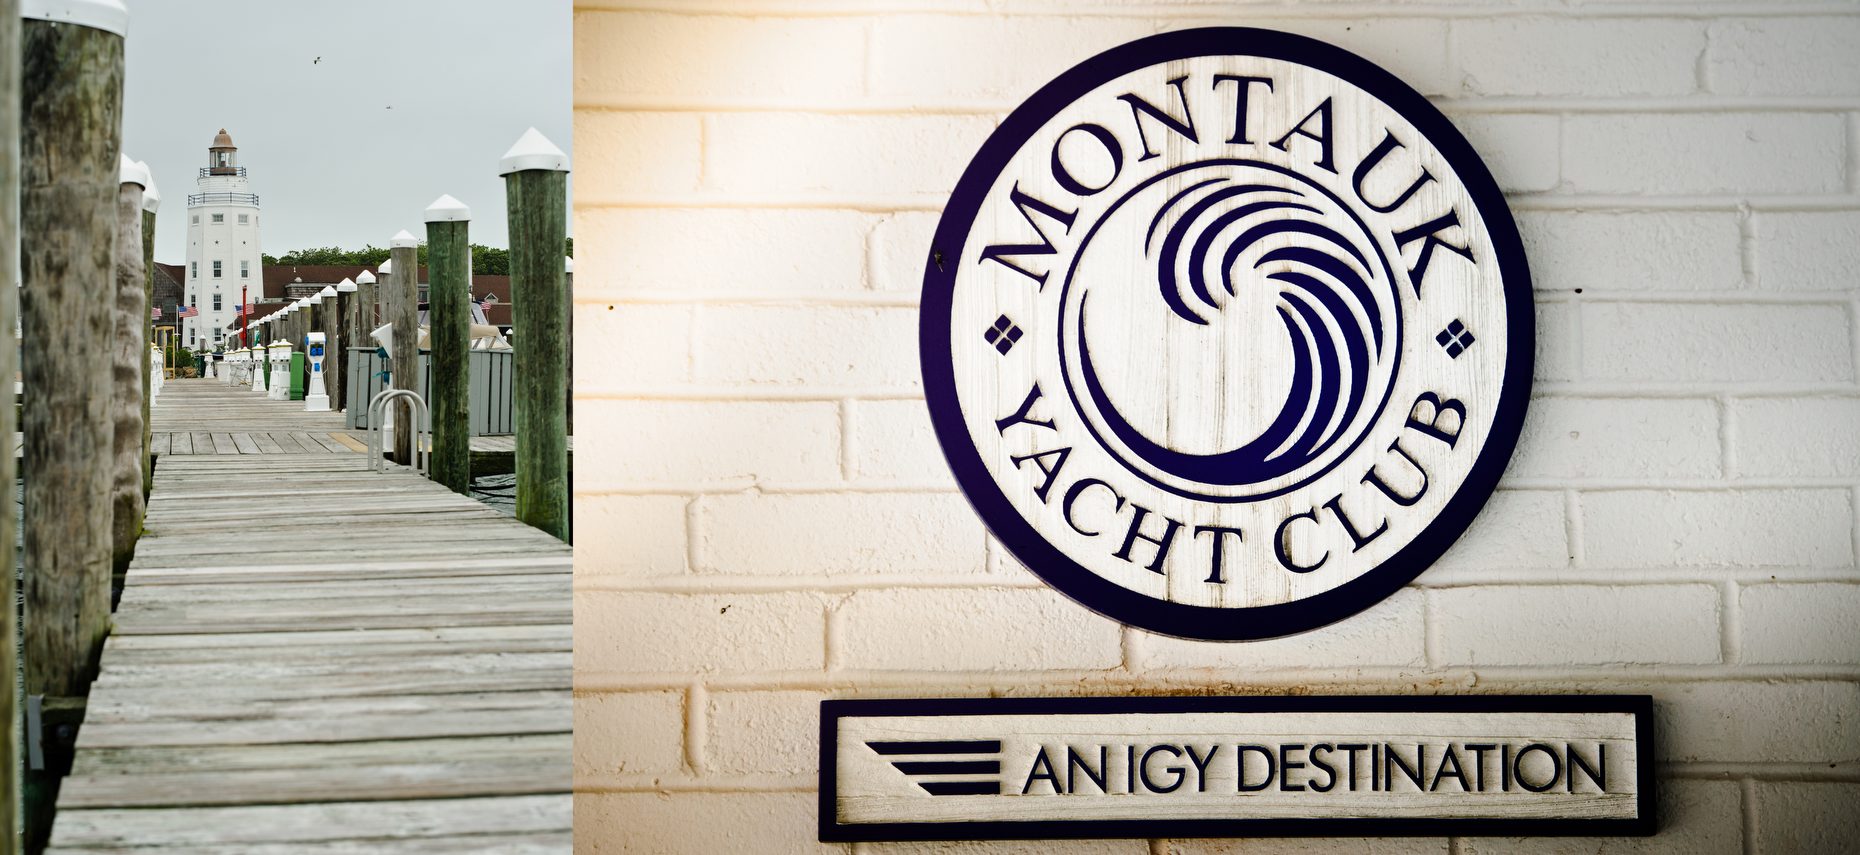 Montauk-Yacht-Club-001.JPG